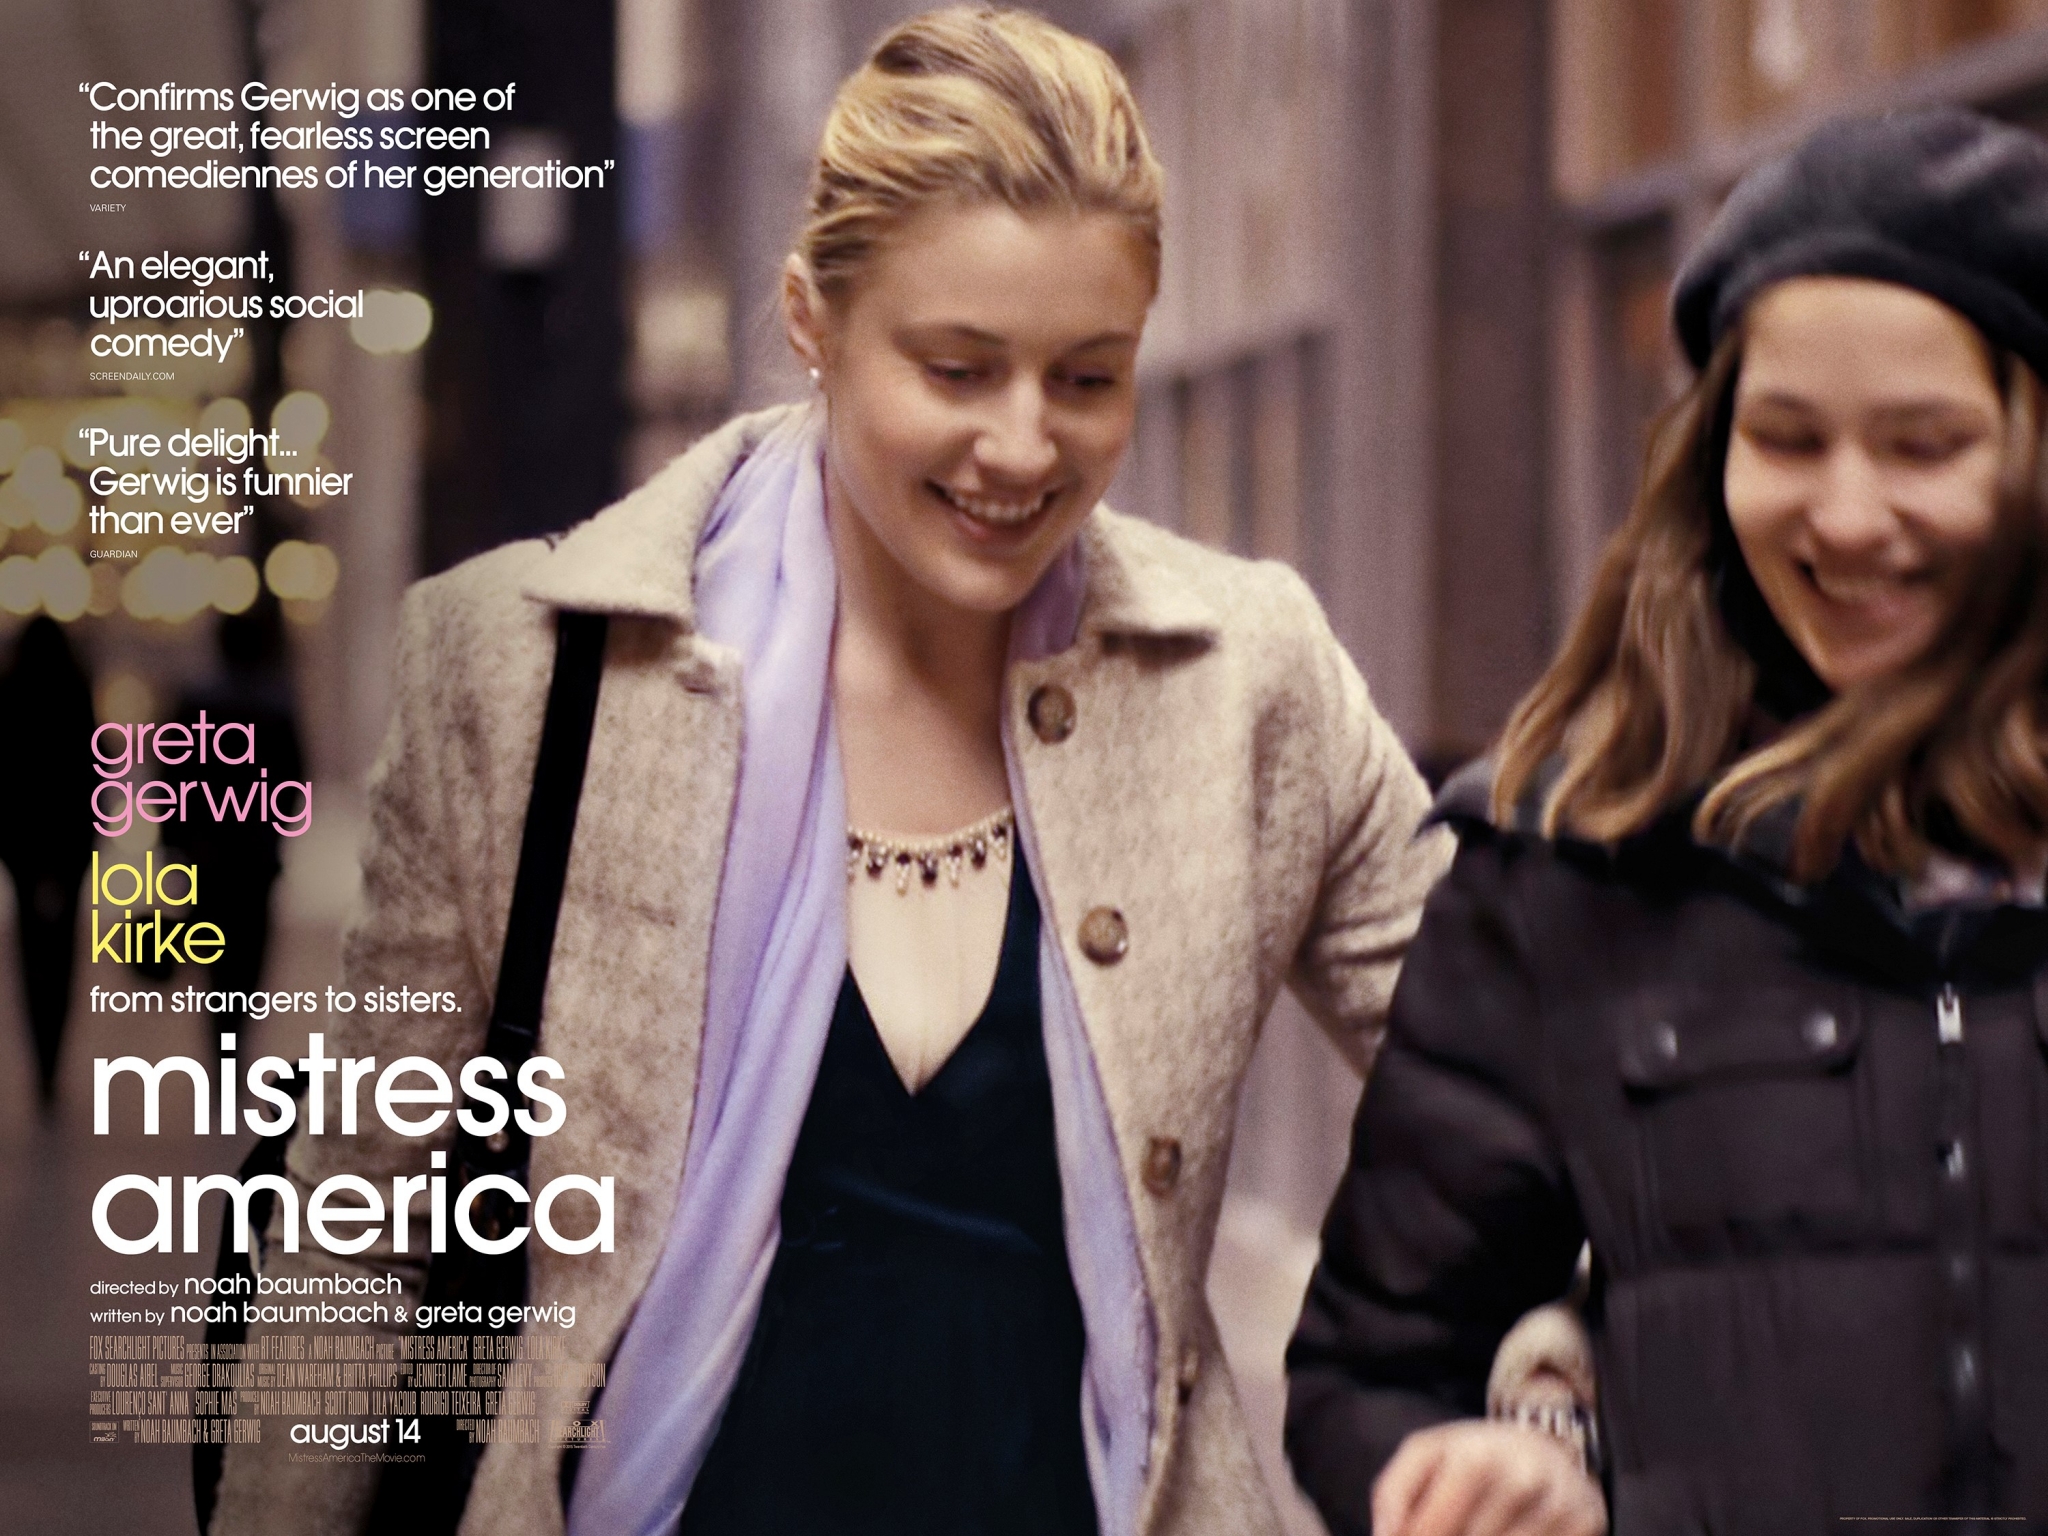 Road to Cinema Talks ‘Mistress America’ with Noah Baumbach, Greta Gerwig, and Lola Kirke